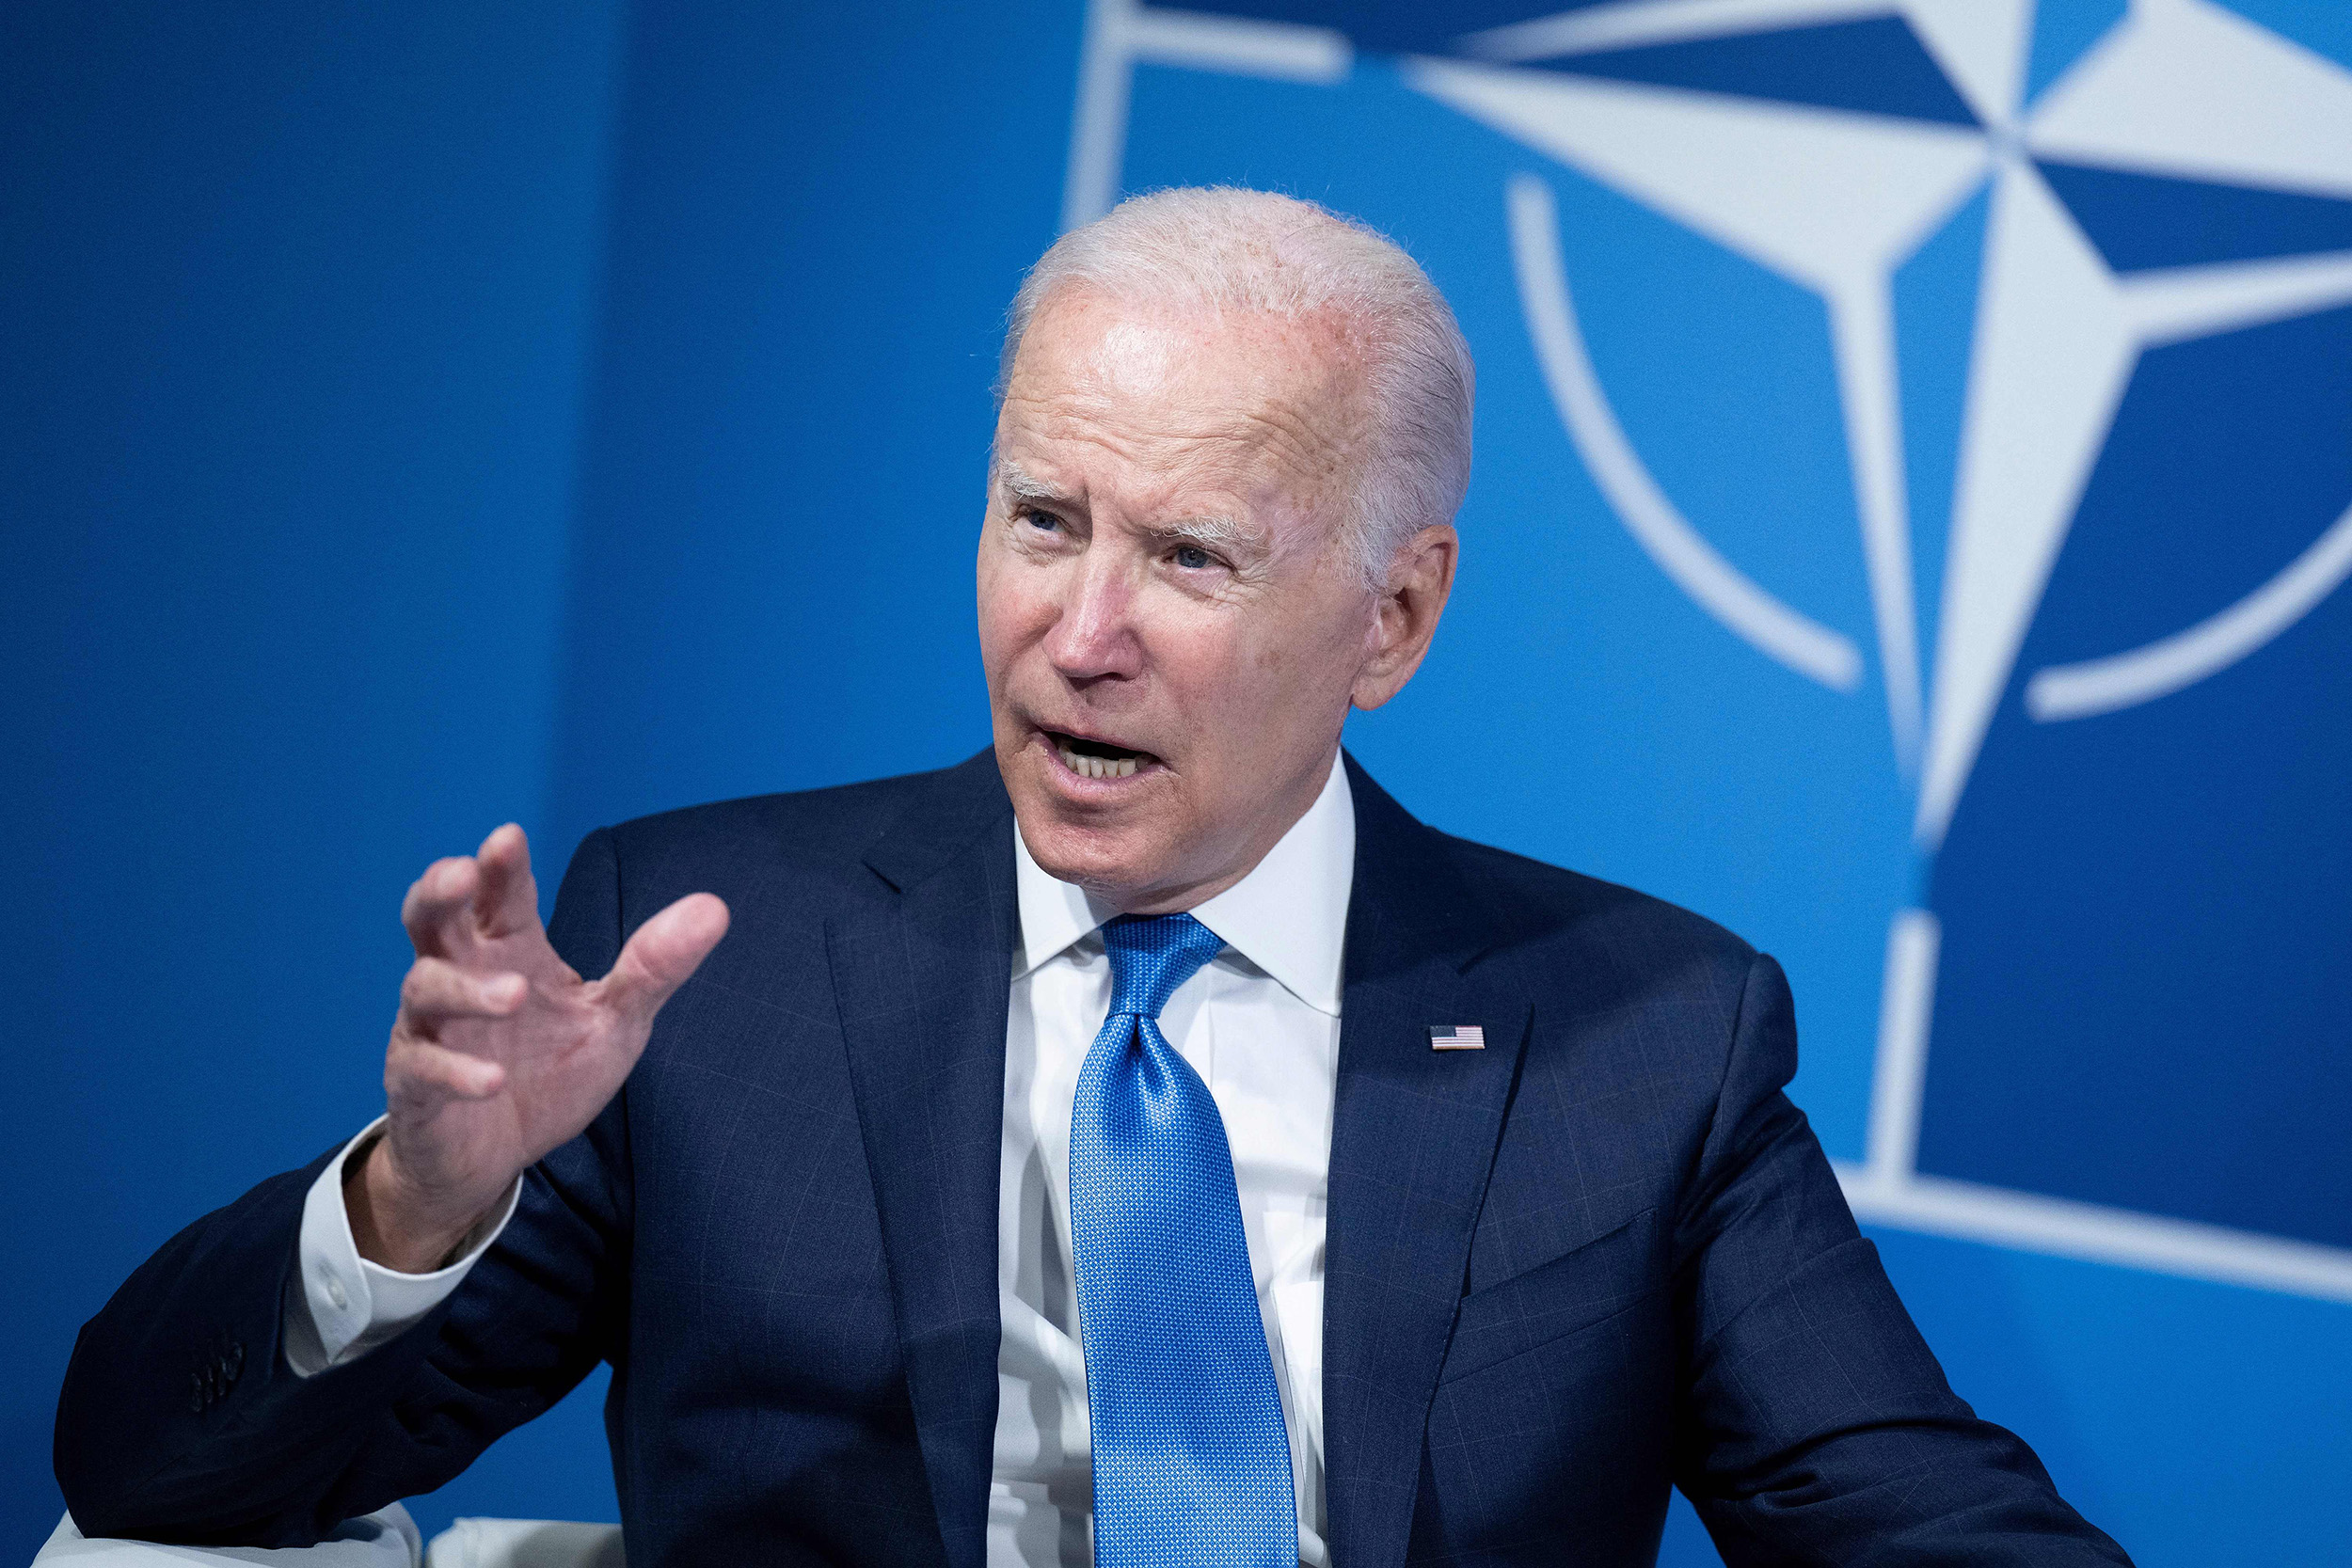 US President Joe Biden speaks ahead of the NATO summit at the Ifema congress centre in Madrid, Spain, on June 29.